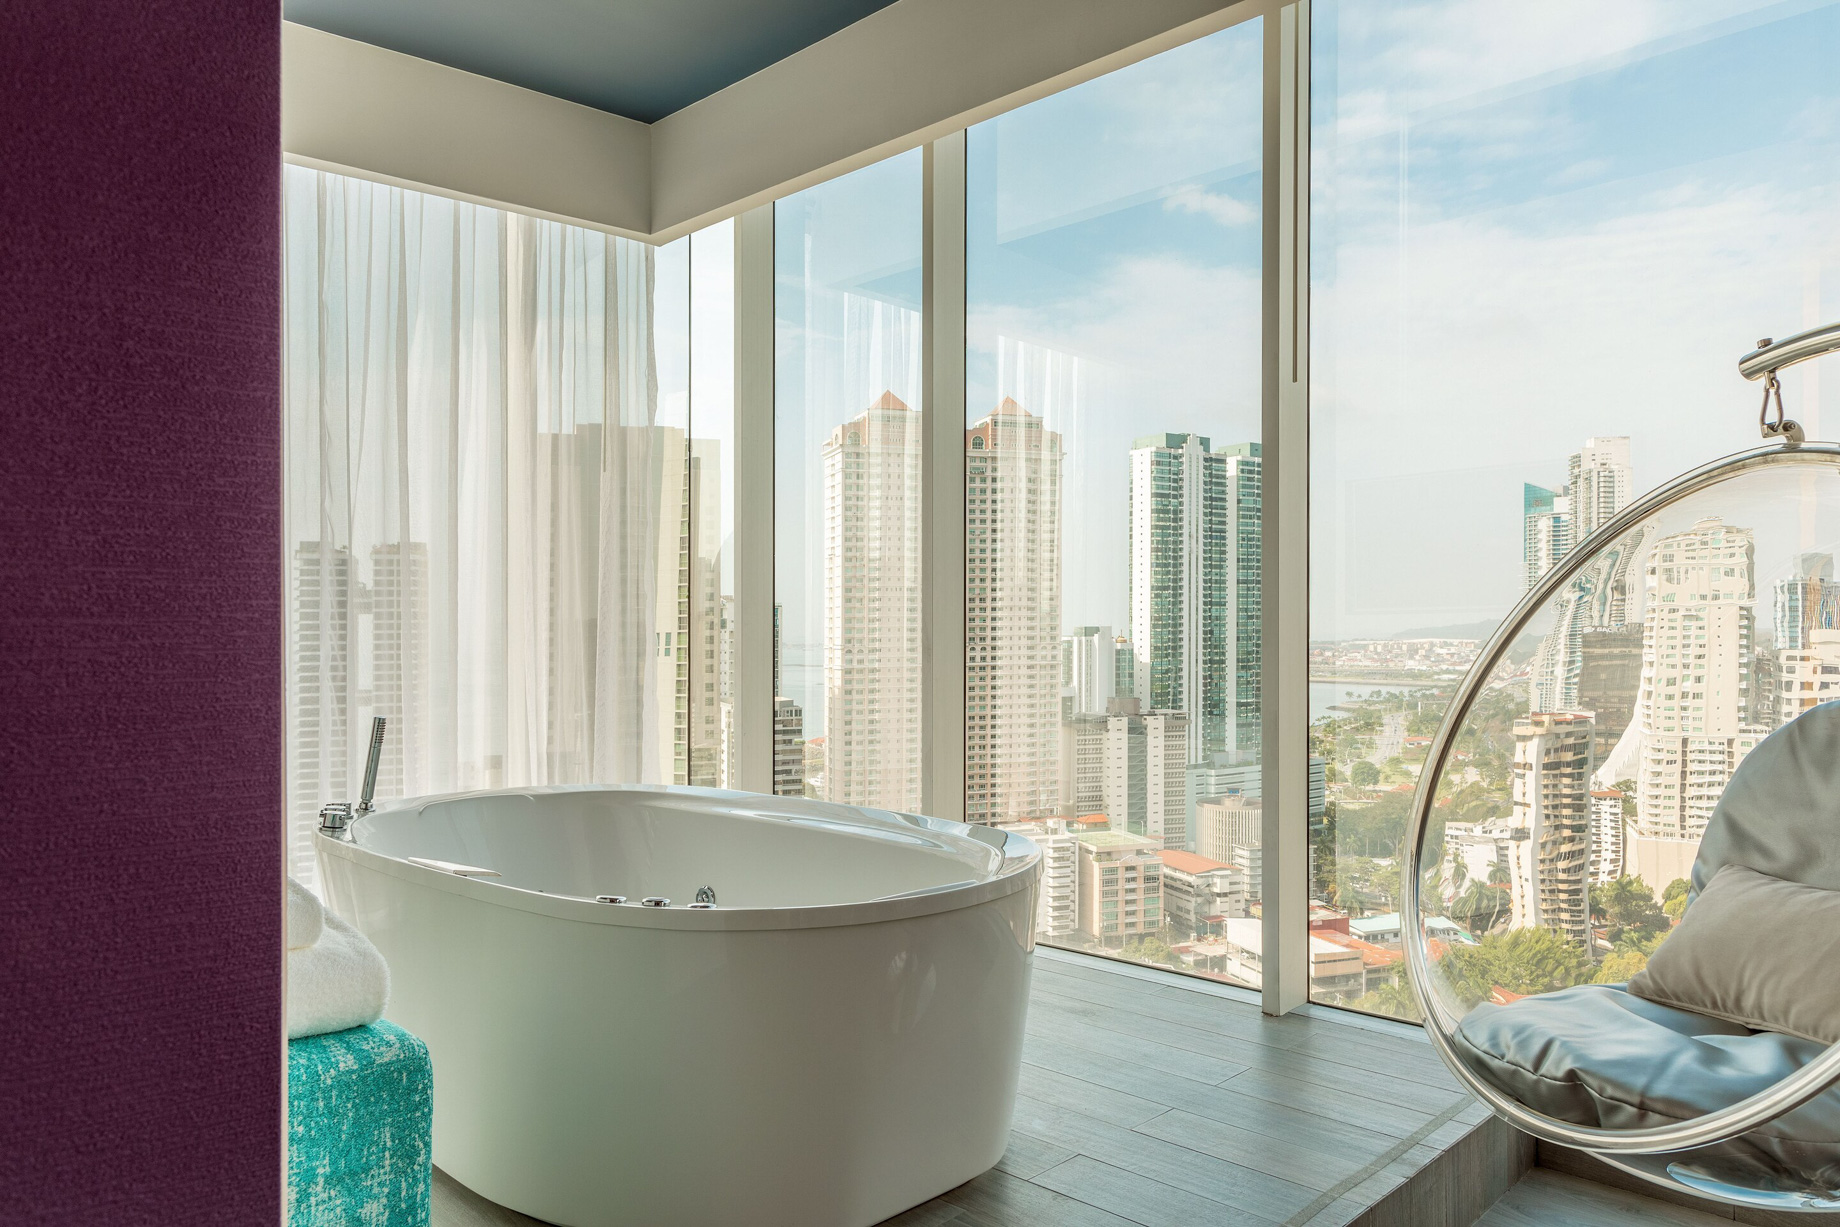 W Panama Hotel – Panama City, Panama – Suite Bathroom Tub View